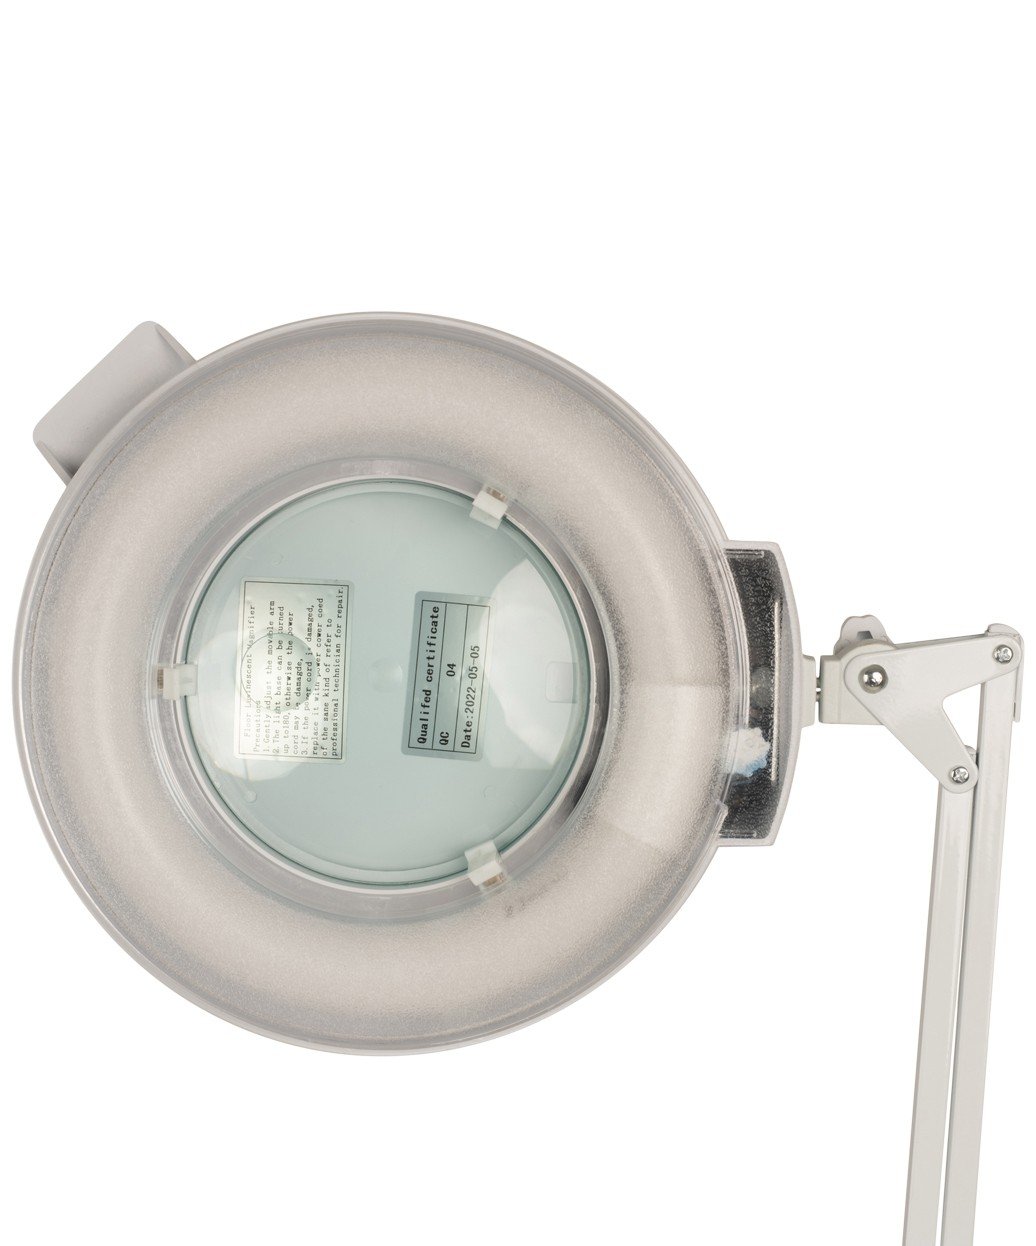 2 in 1 Ozone Facial Steamer & Mag Lamp Combo